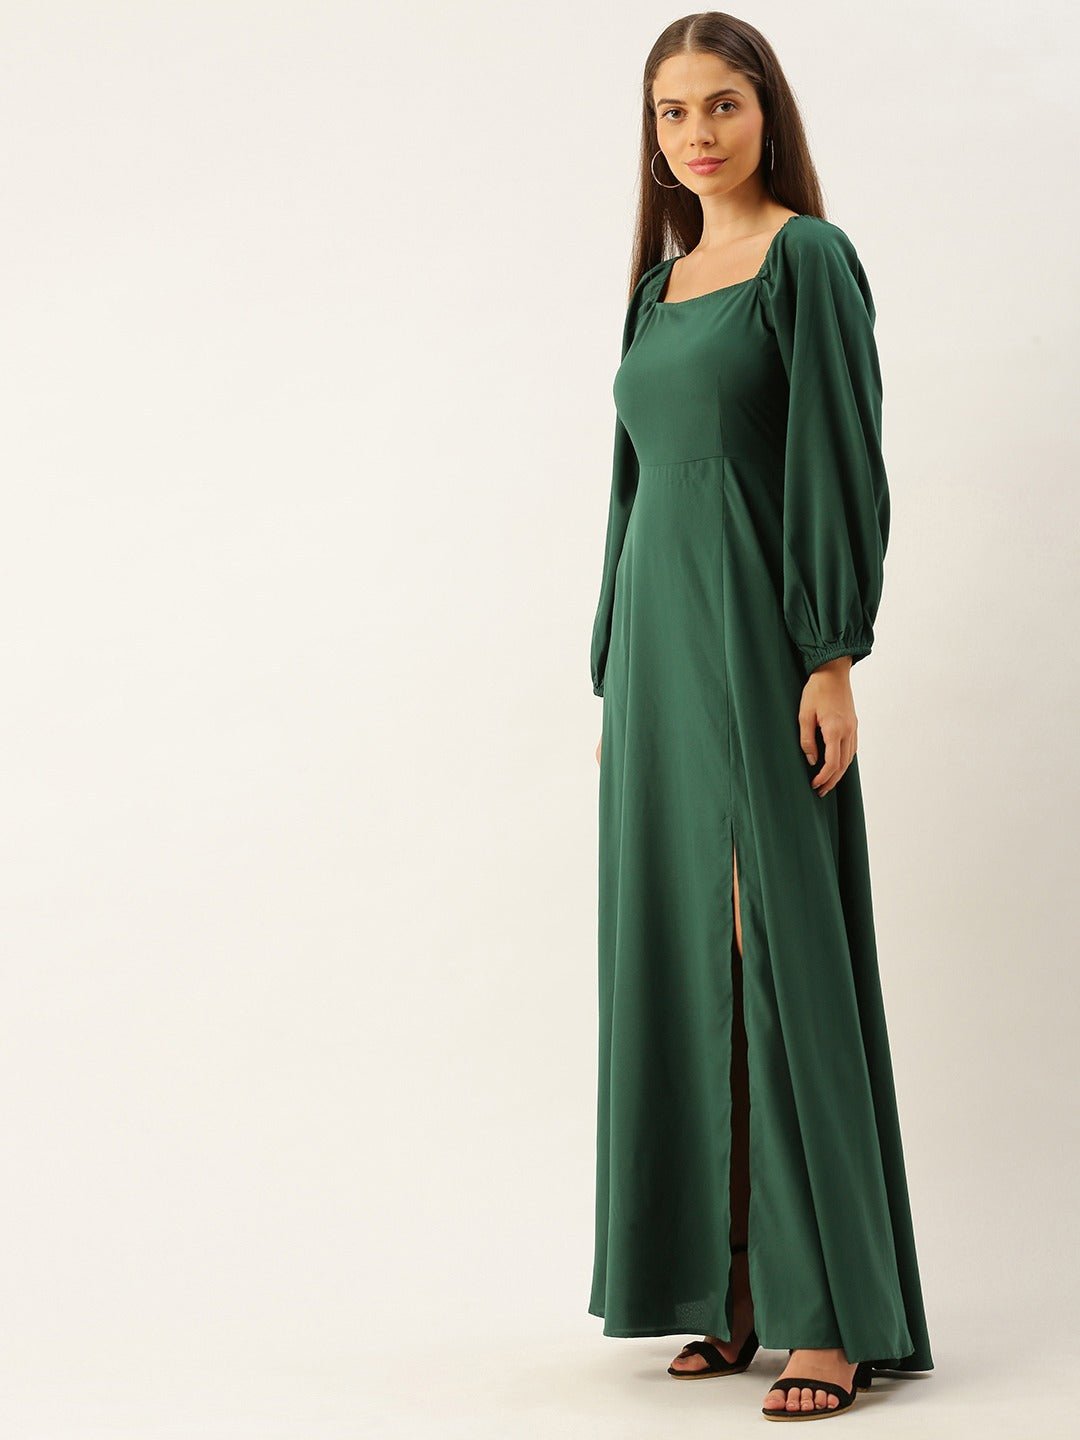 Folk Republic Women Solid Green Square Neck Slim-Fit Maxi Dress - #folk republic#